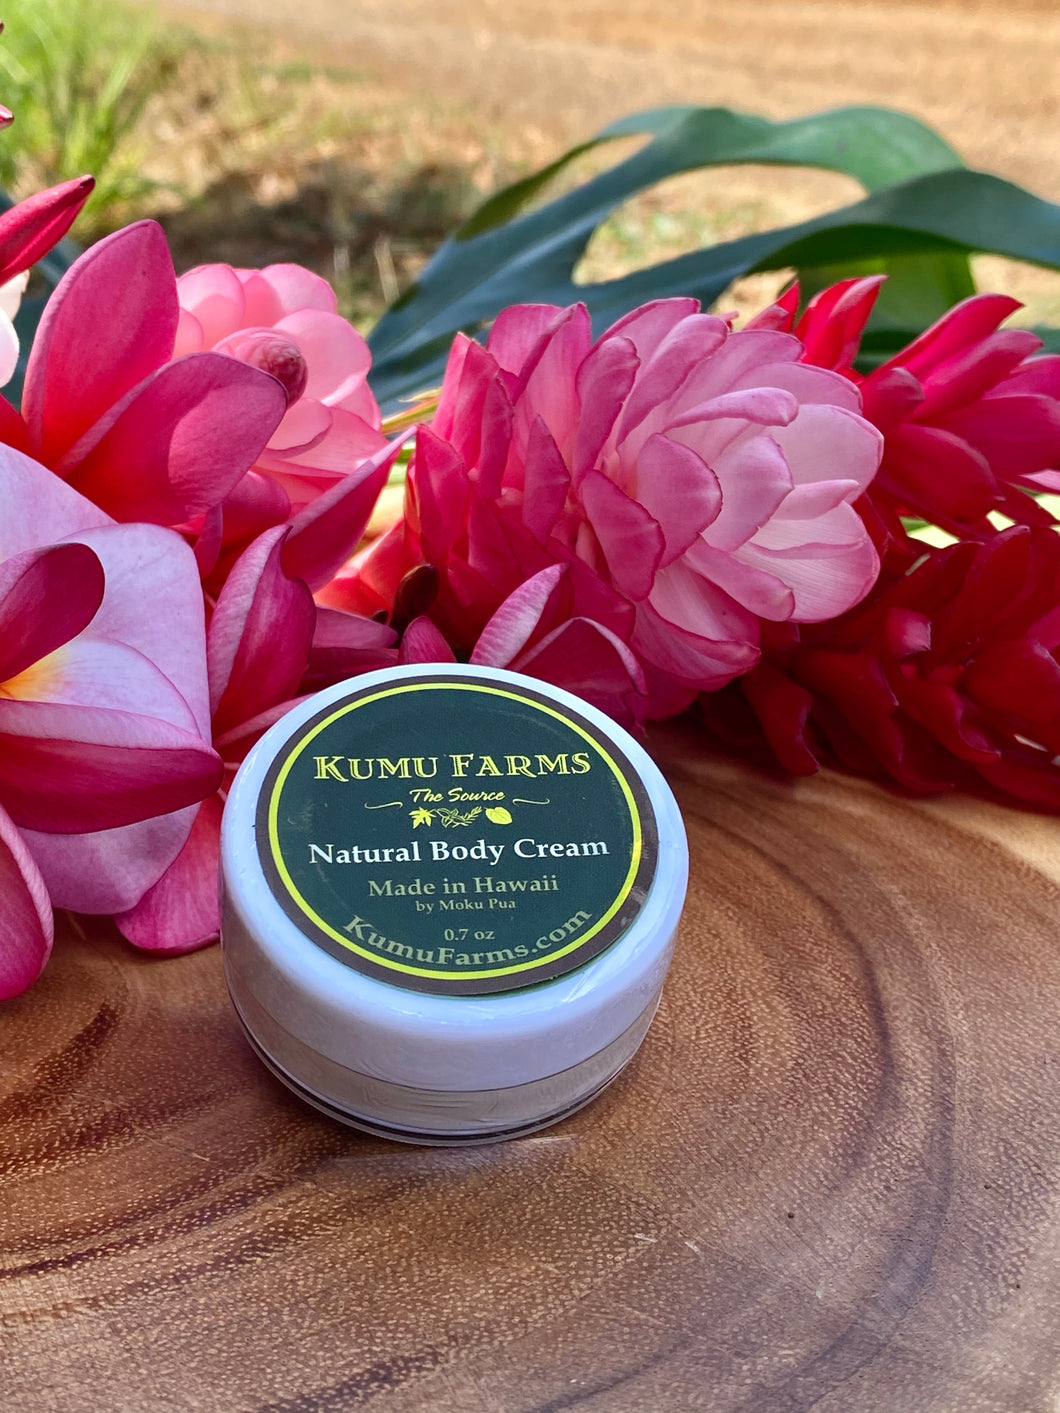 Natural Body Cream - Kumu Farms